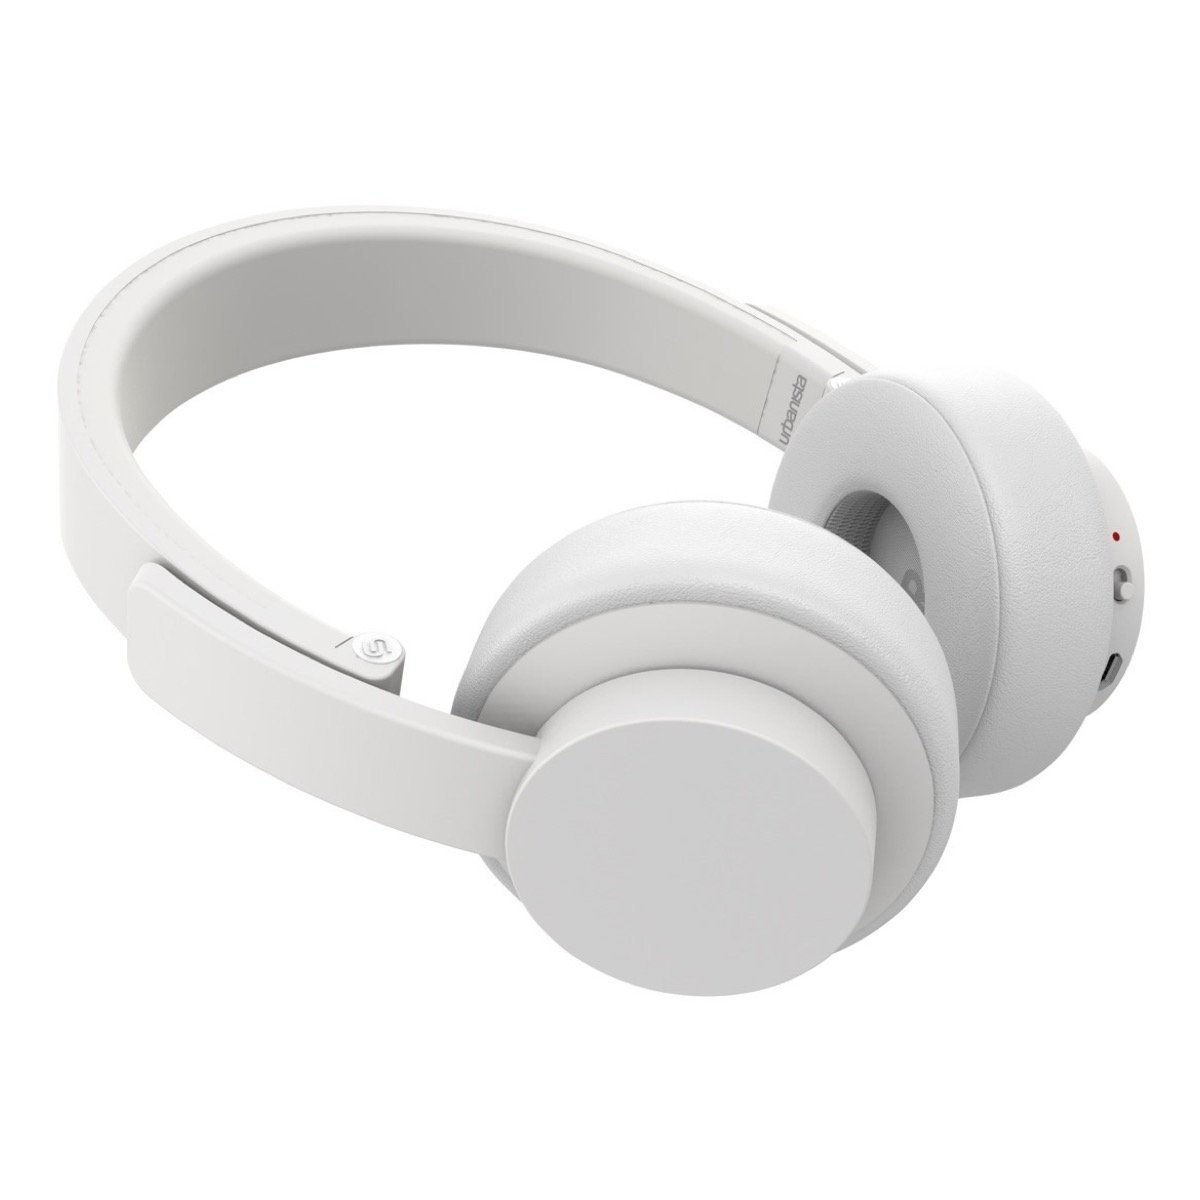 Urbanista Seattle Bluetooth Headphones in White - image 2 of 5